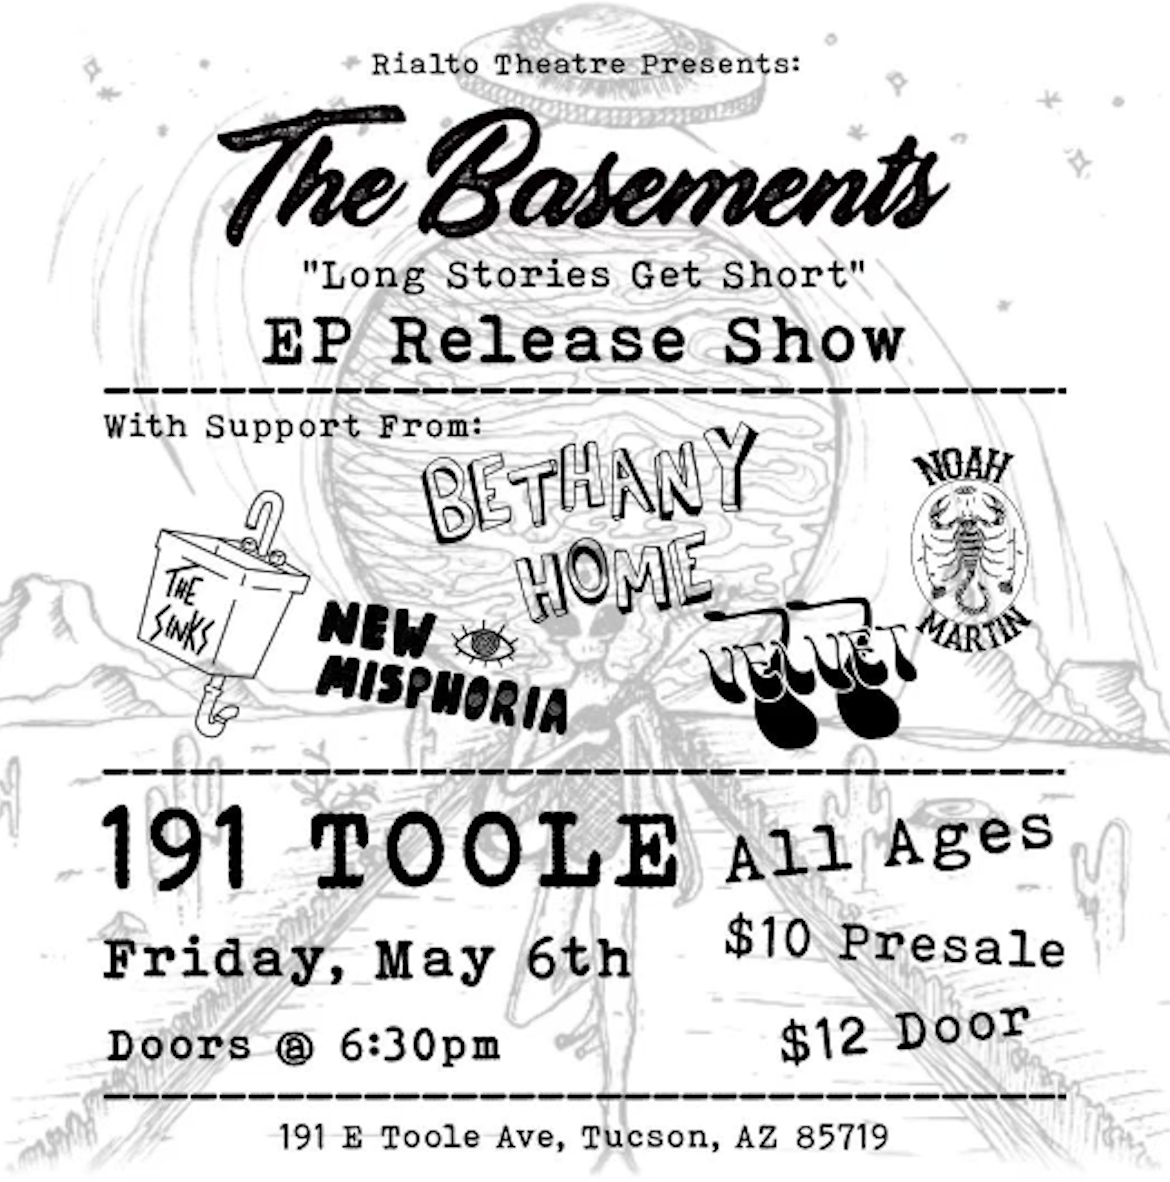 The Basements EP Release Show flyer courtesy of Sebastian Driver